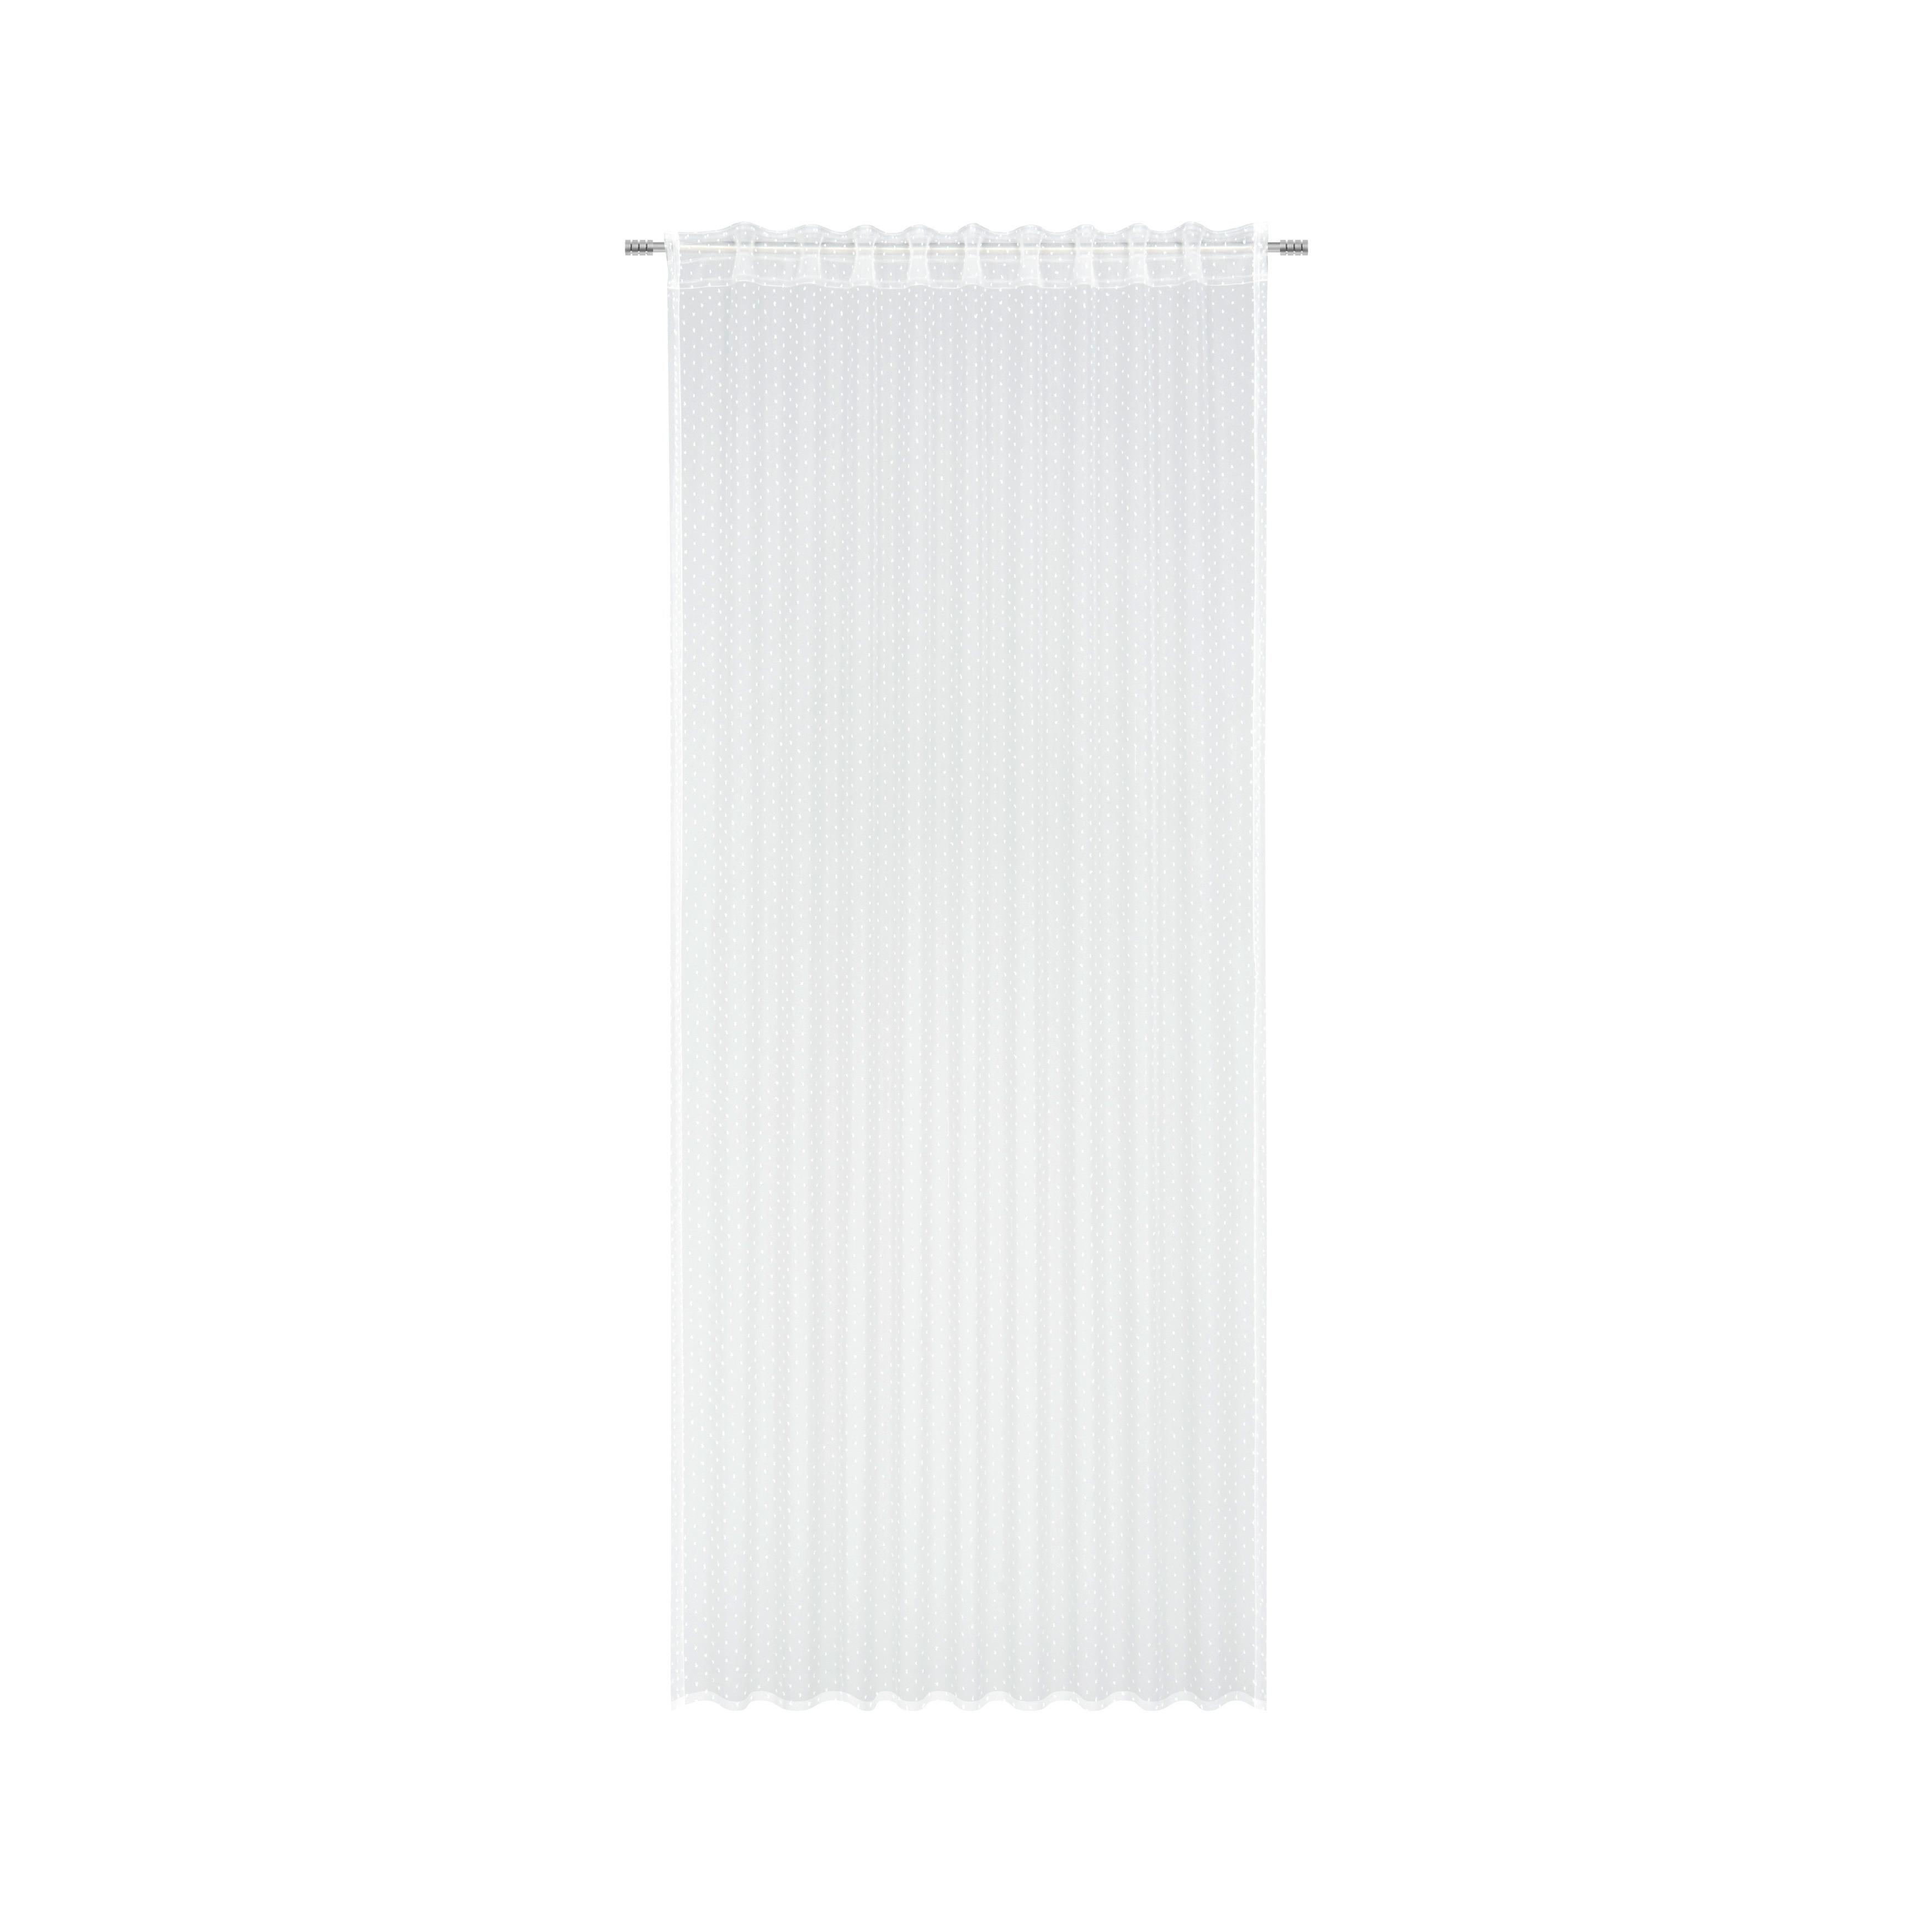 Fertigvorhang Lea in Weiß ca. 140x245cm - Weiß, ROMANTIK / LANDHAUS, Textil (140/245cm) - Modern Living